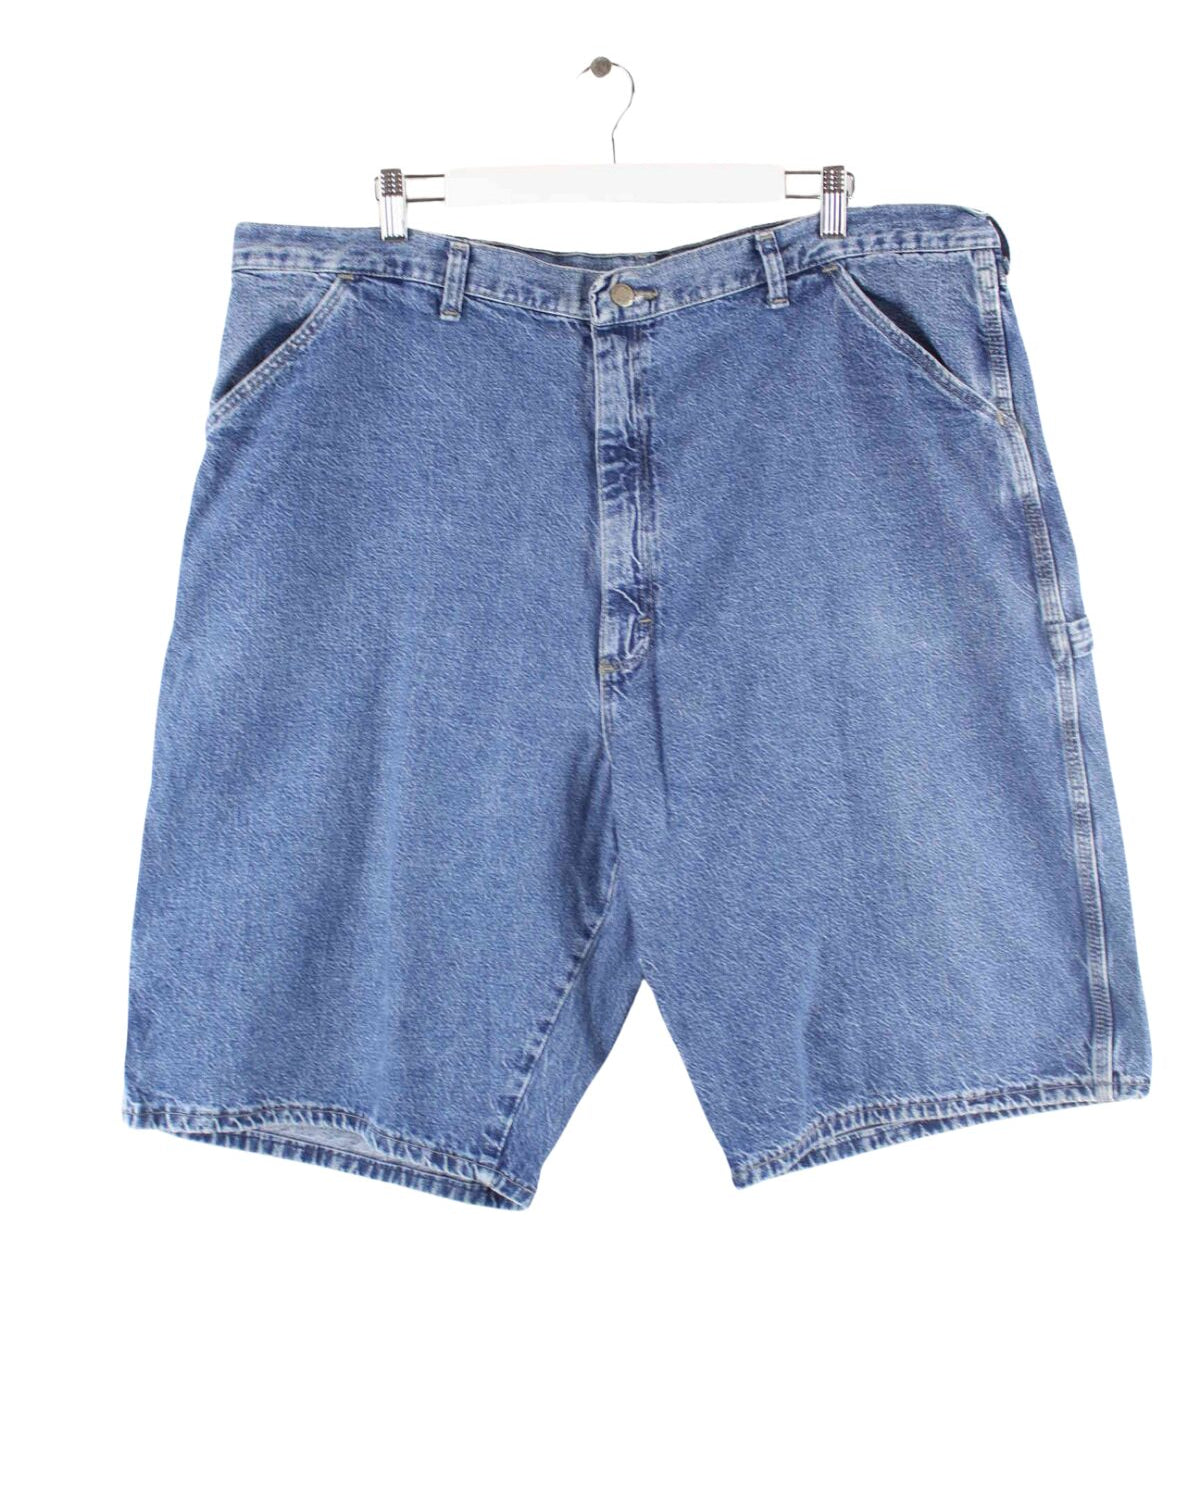 Wrangler y2k Carpenter Jorts / Jeans Shorts Blau W44 (front image)